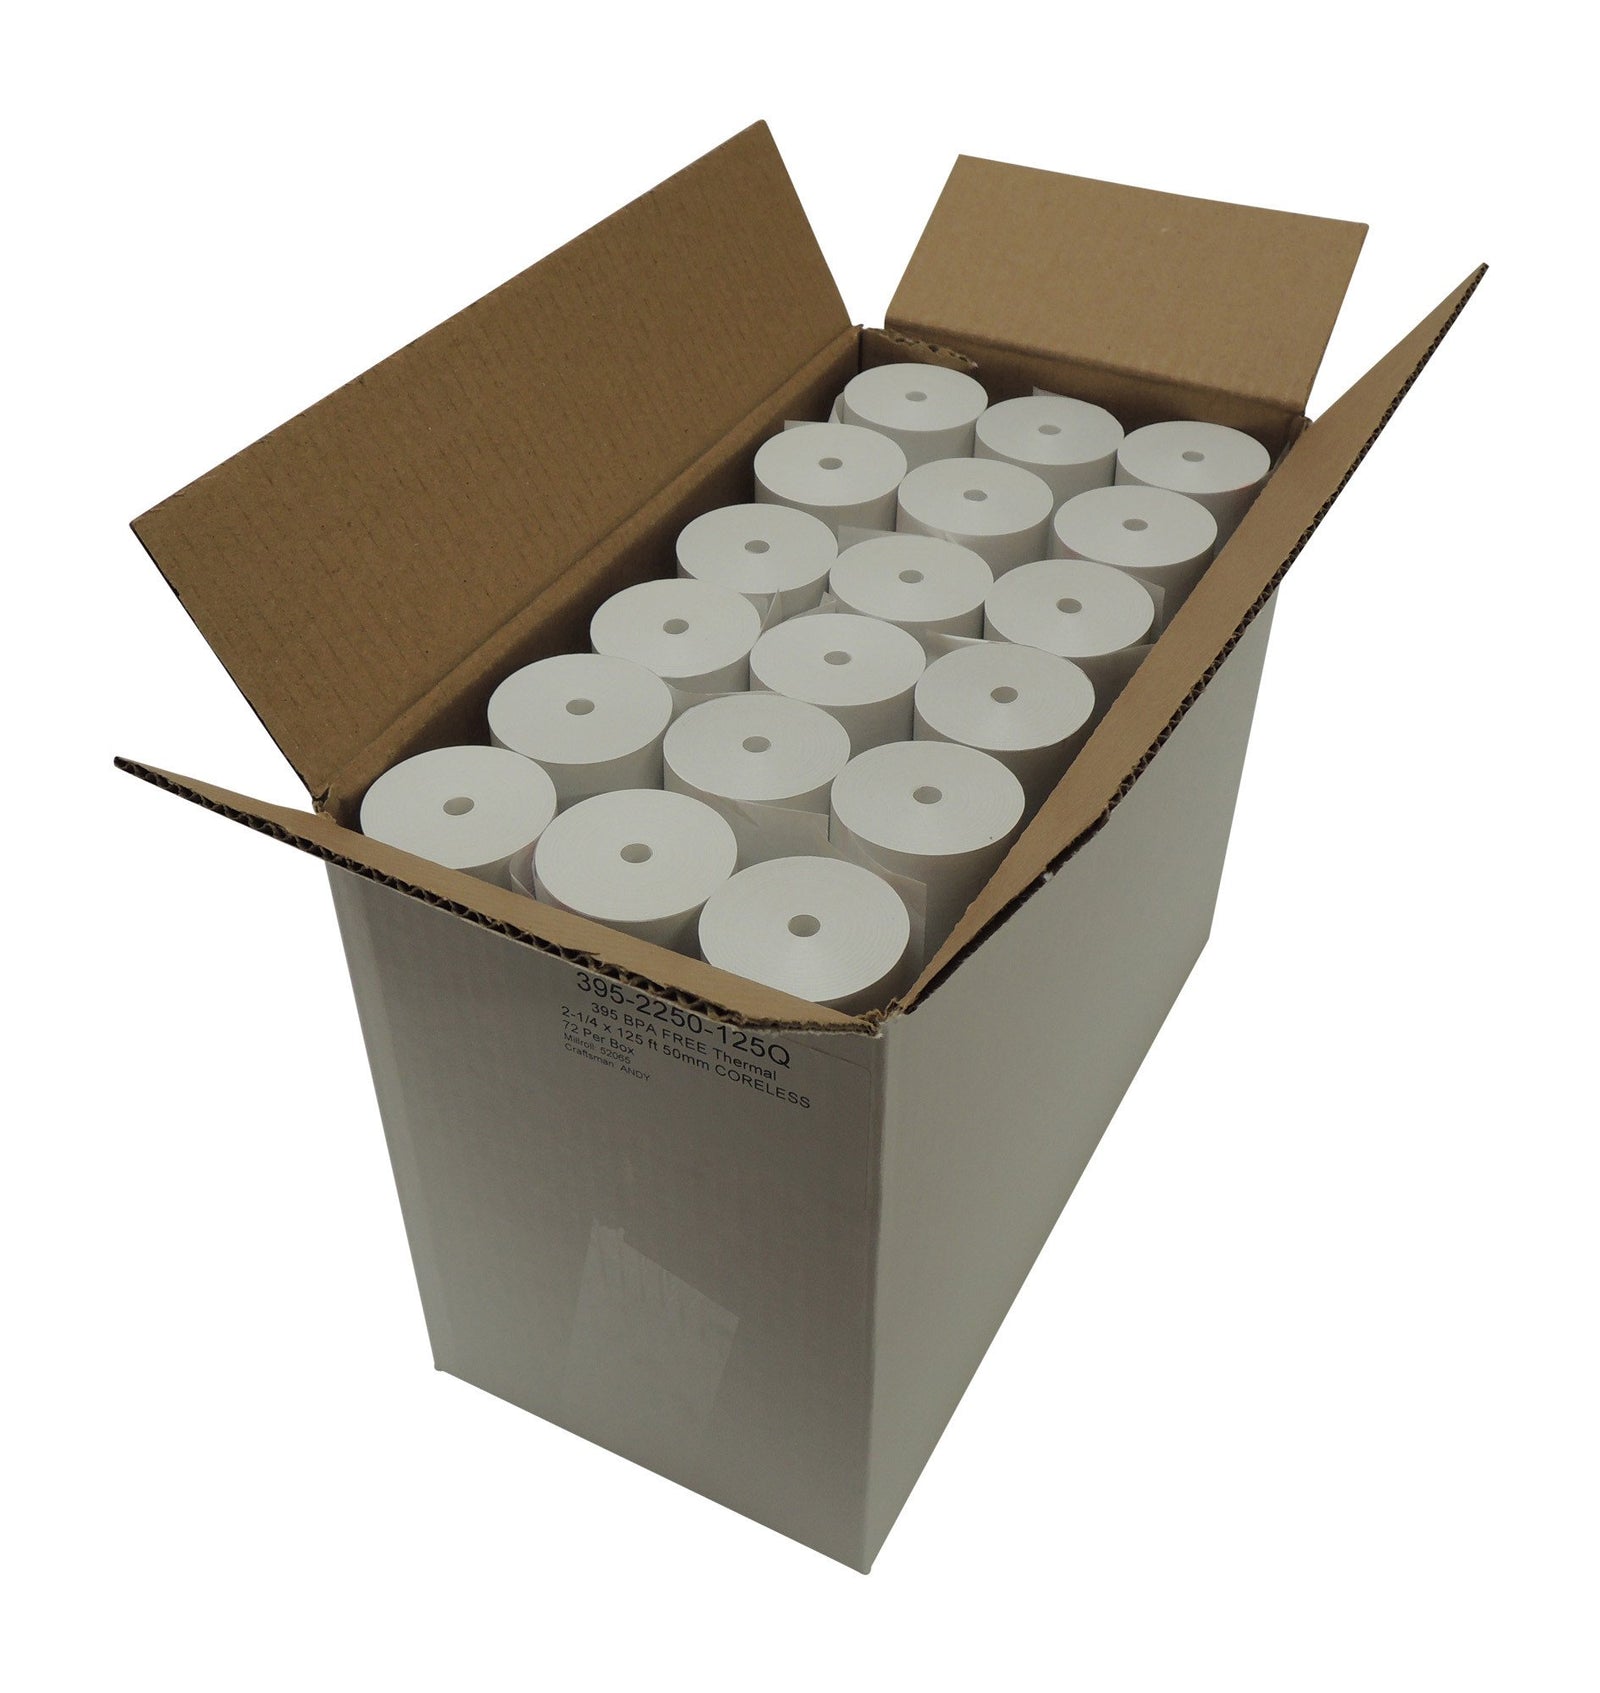 Staples Thermal Paper Rolls, 2 1/4 x 80', BPA Free, 10/Pack